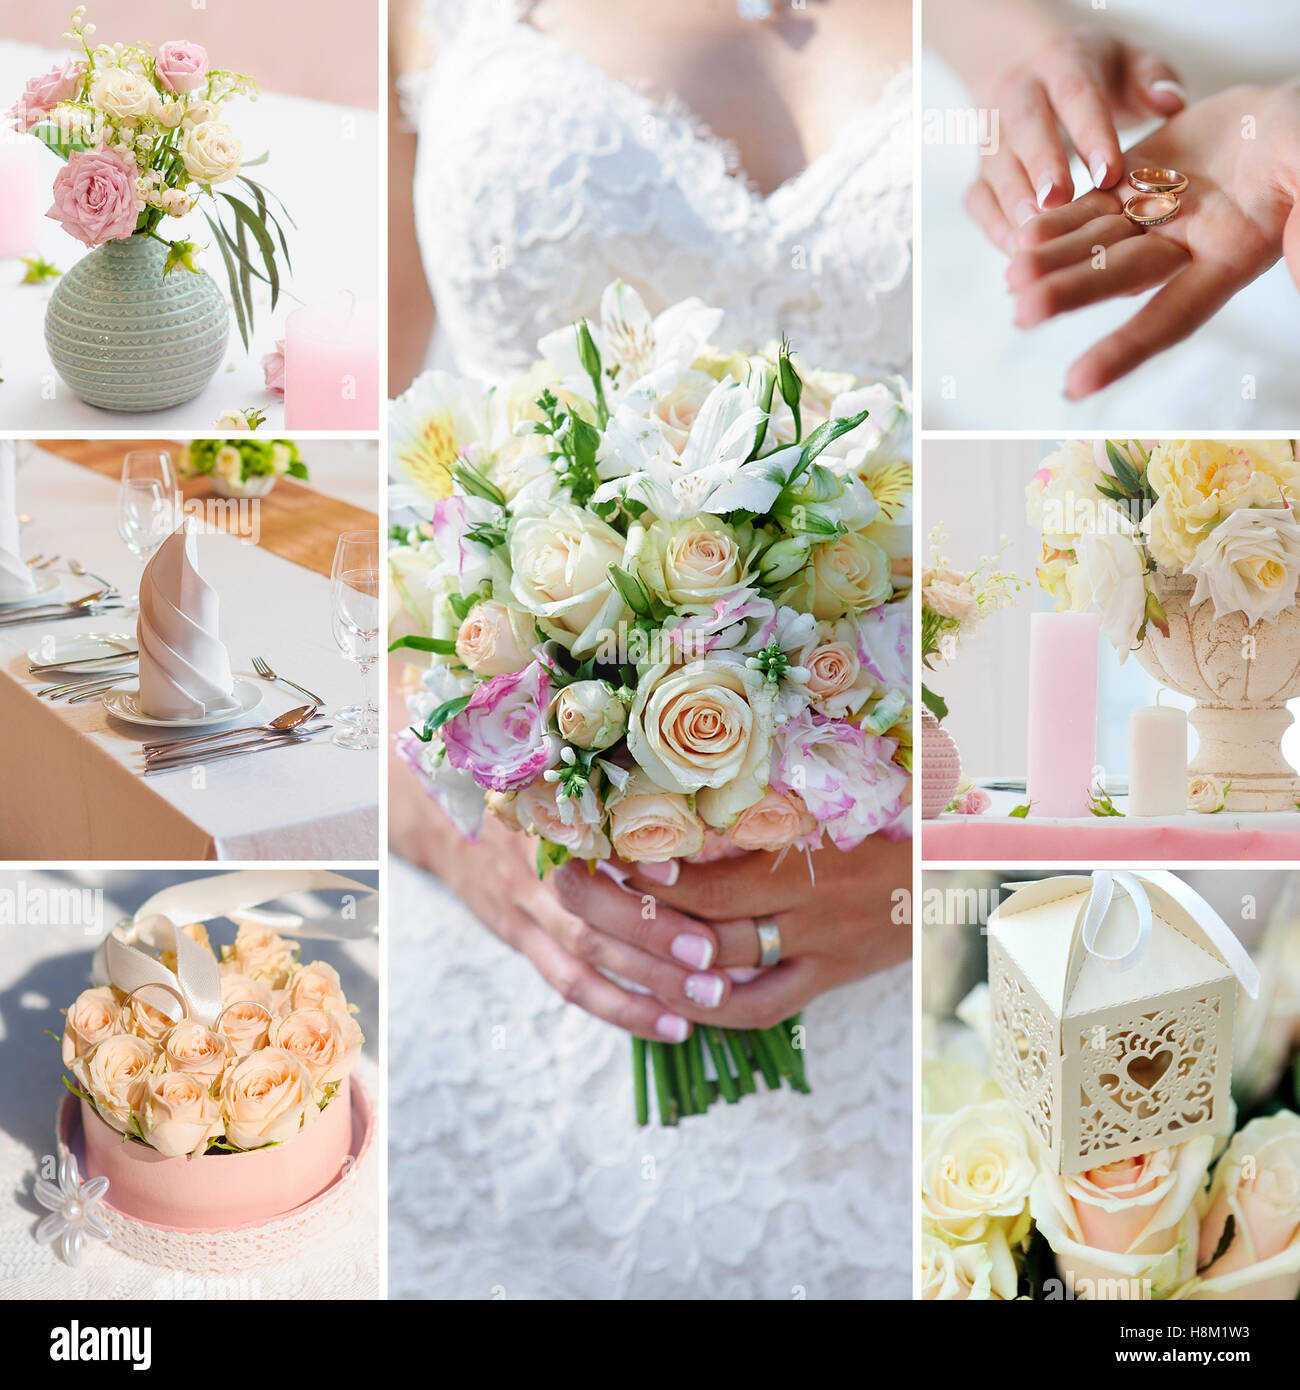 wedding collage brides decor and accessories Stock Photo